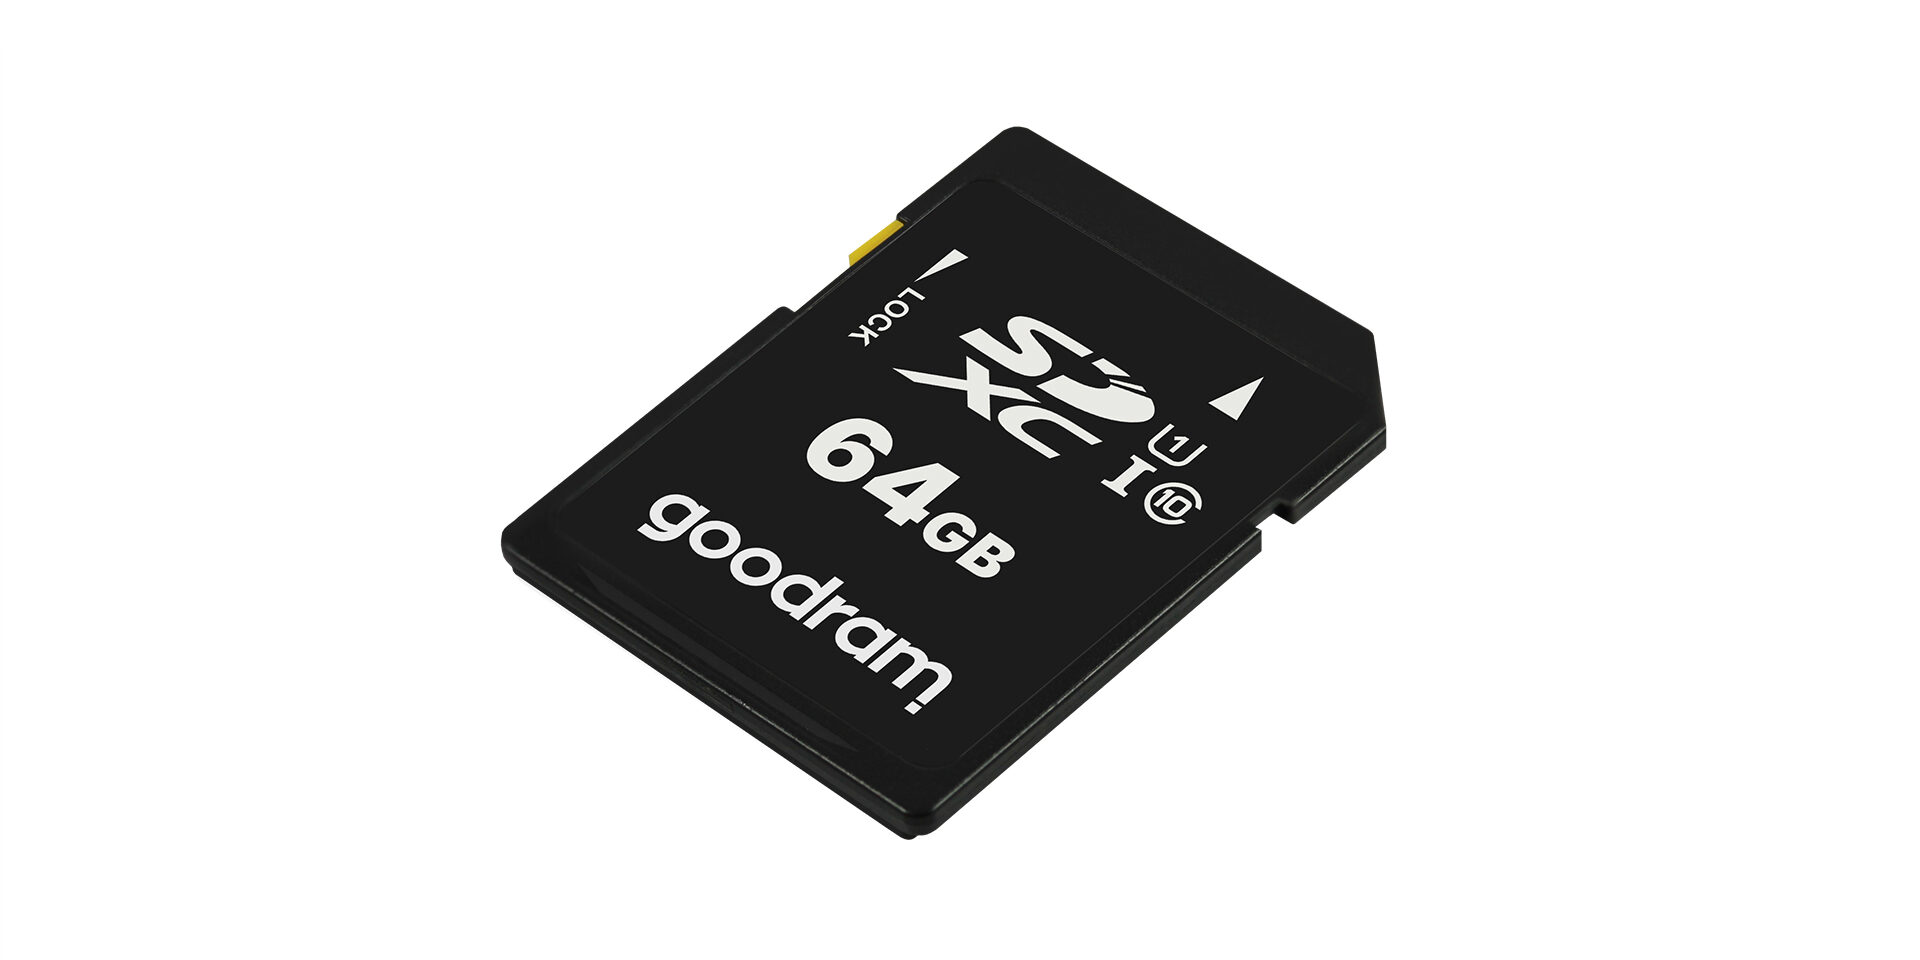 karta pamięci S1A0 marki Goodram